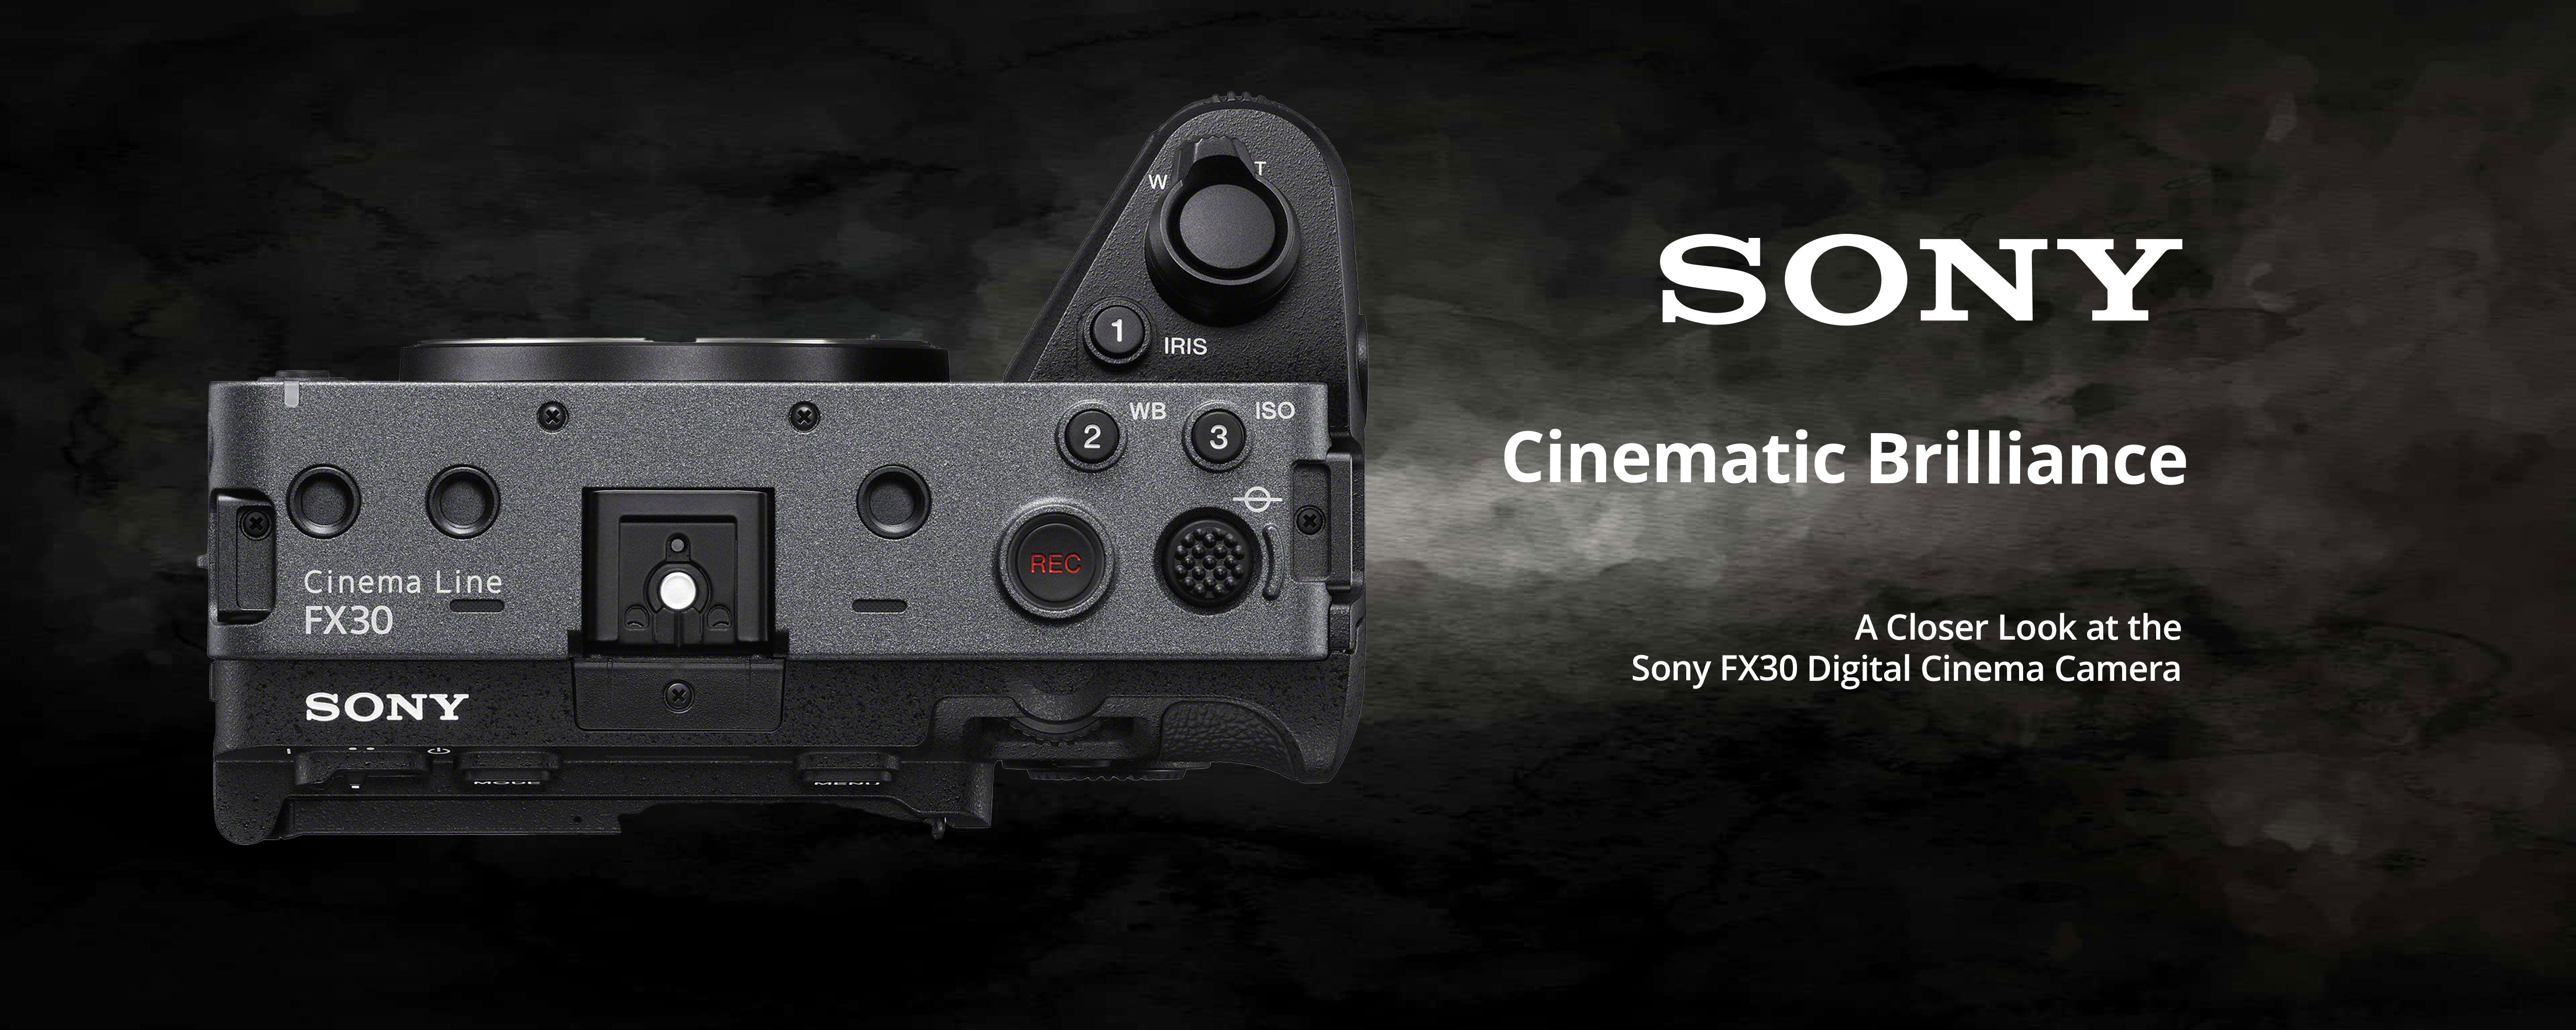 Cinematic Brilliance: A Closer Look at the Sony FX30 Digital Cinema Camera